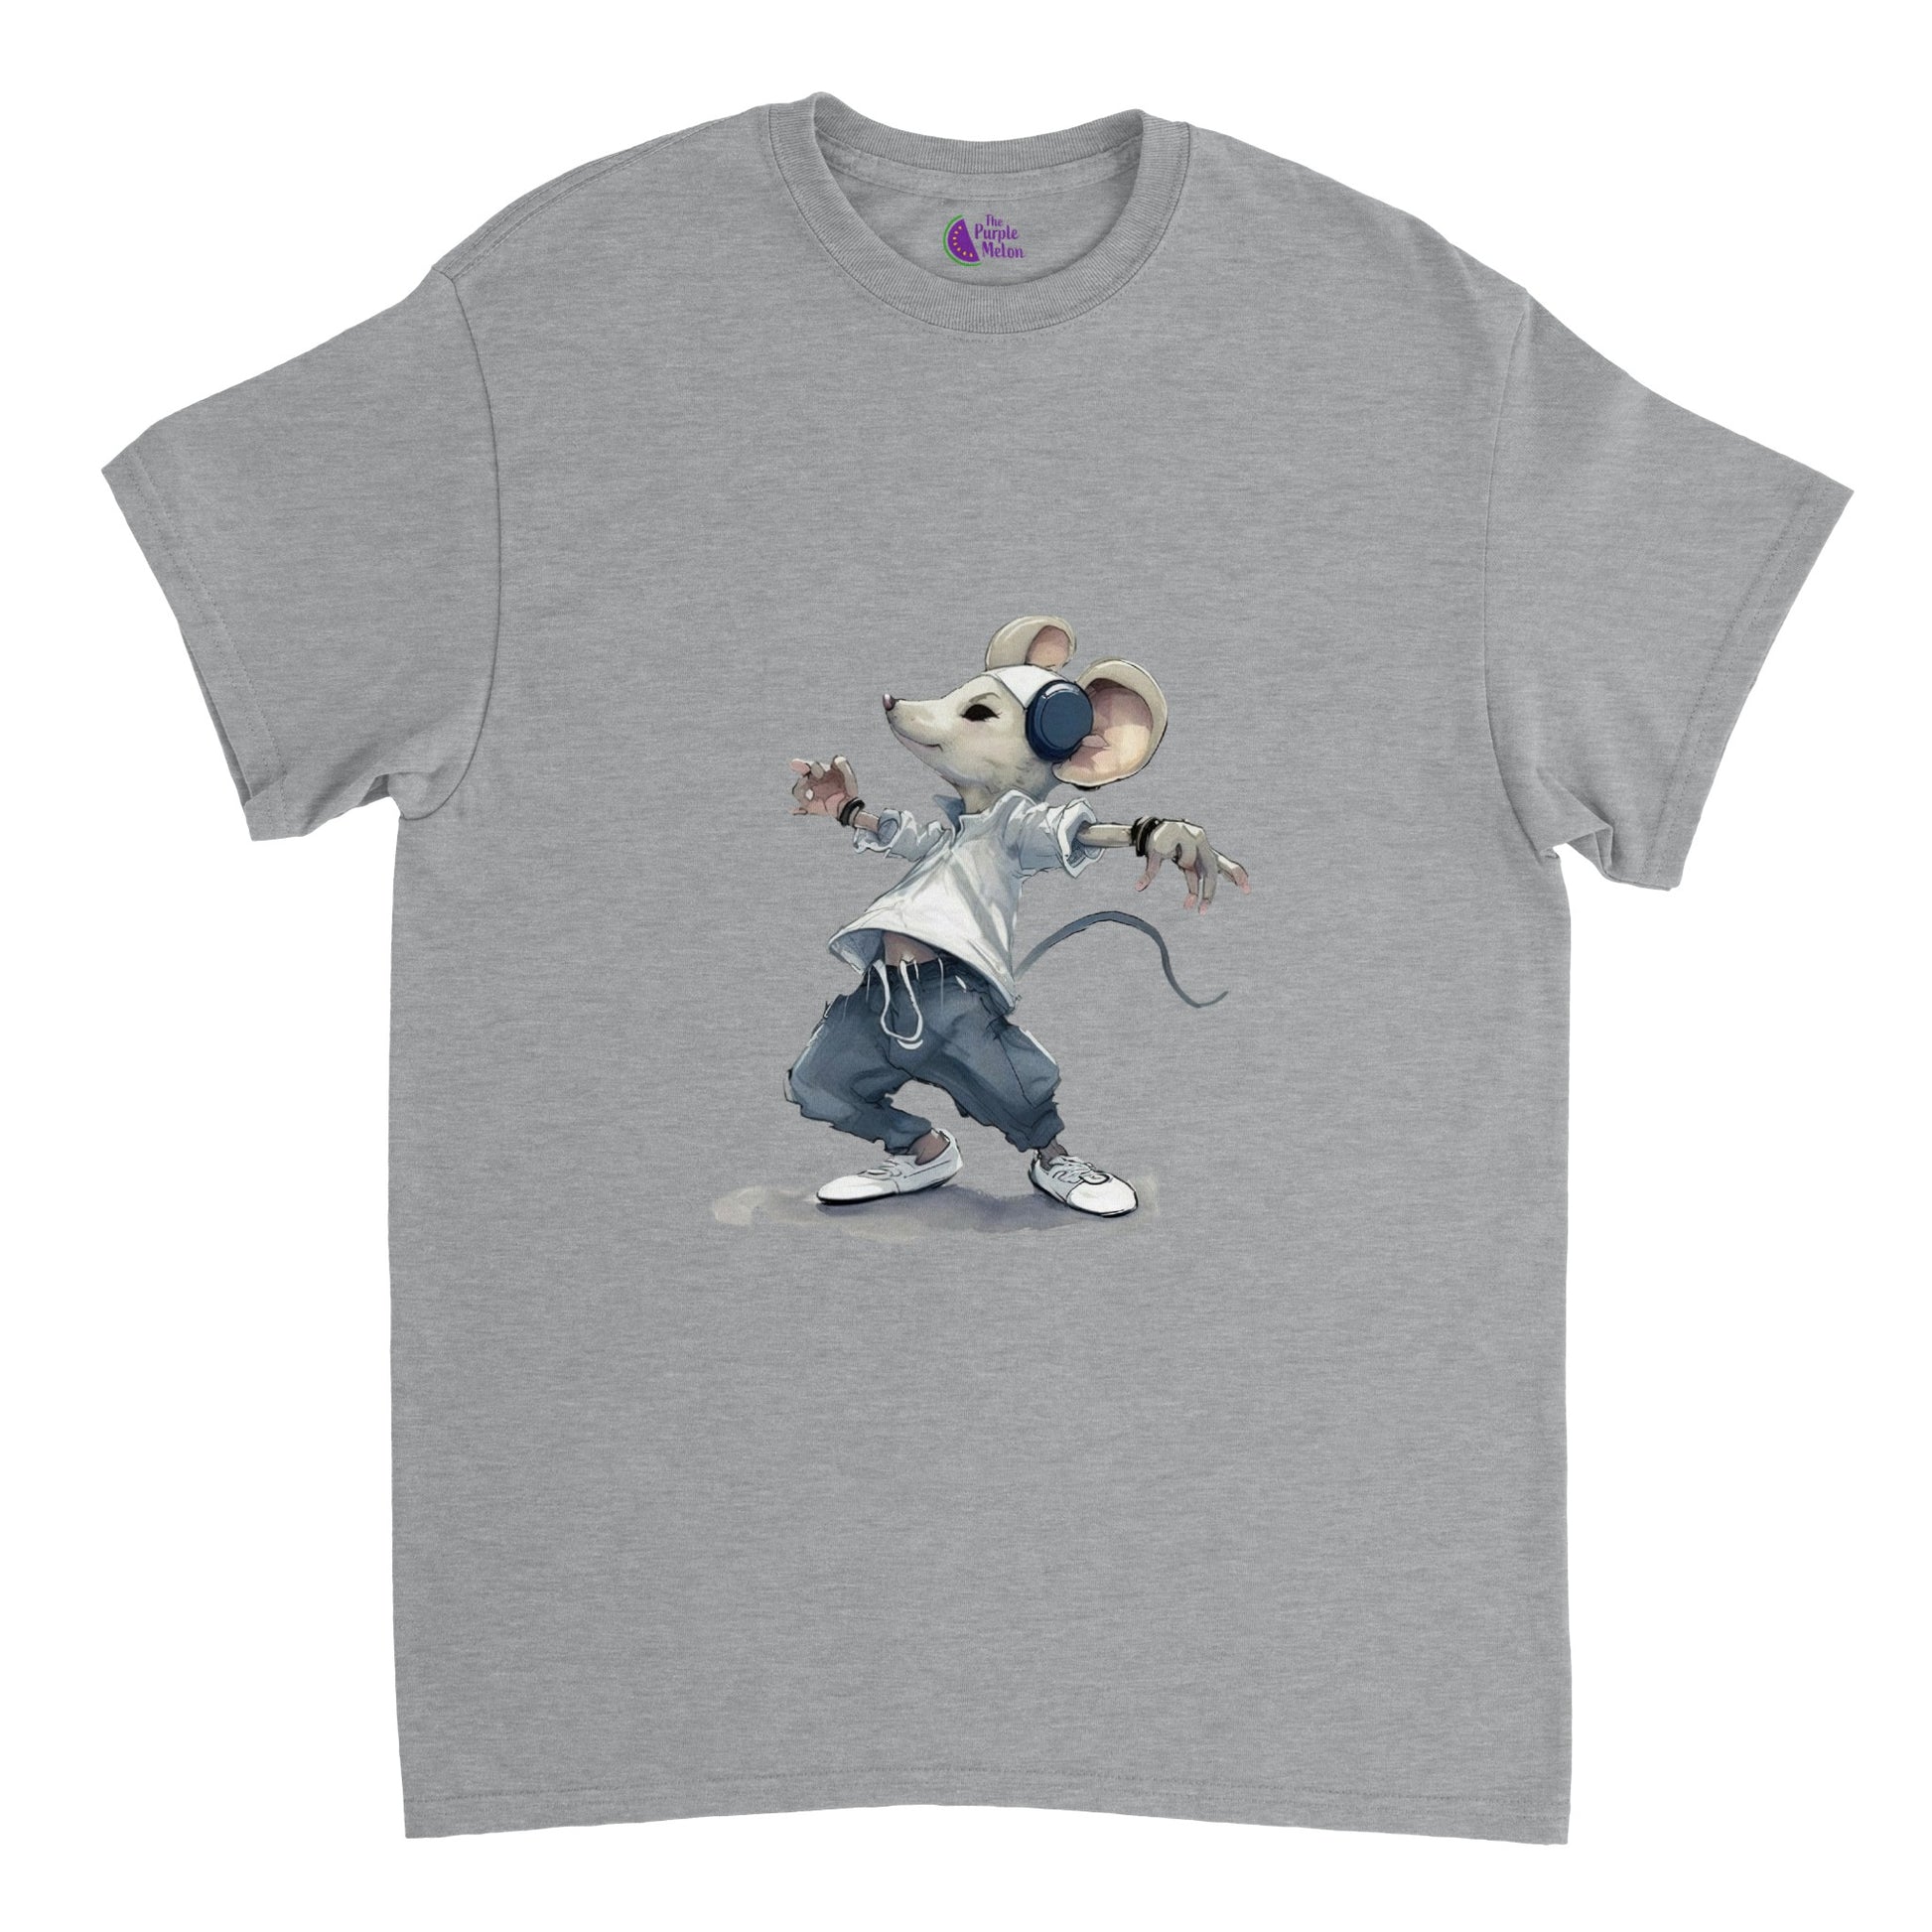 Grey t-shirt with a hip hop mouse print